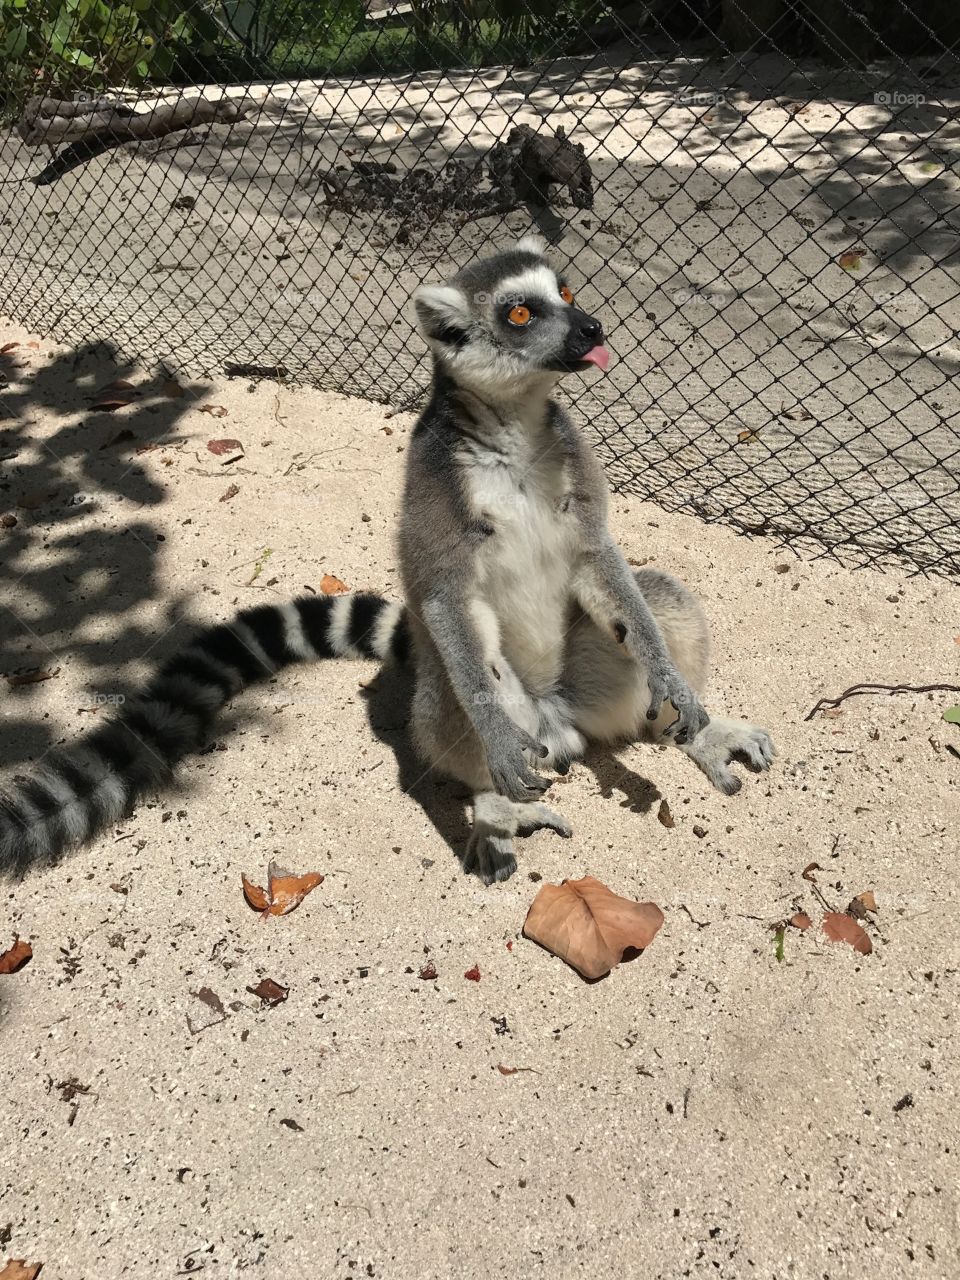 Silly Lemur pose